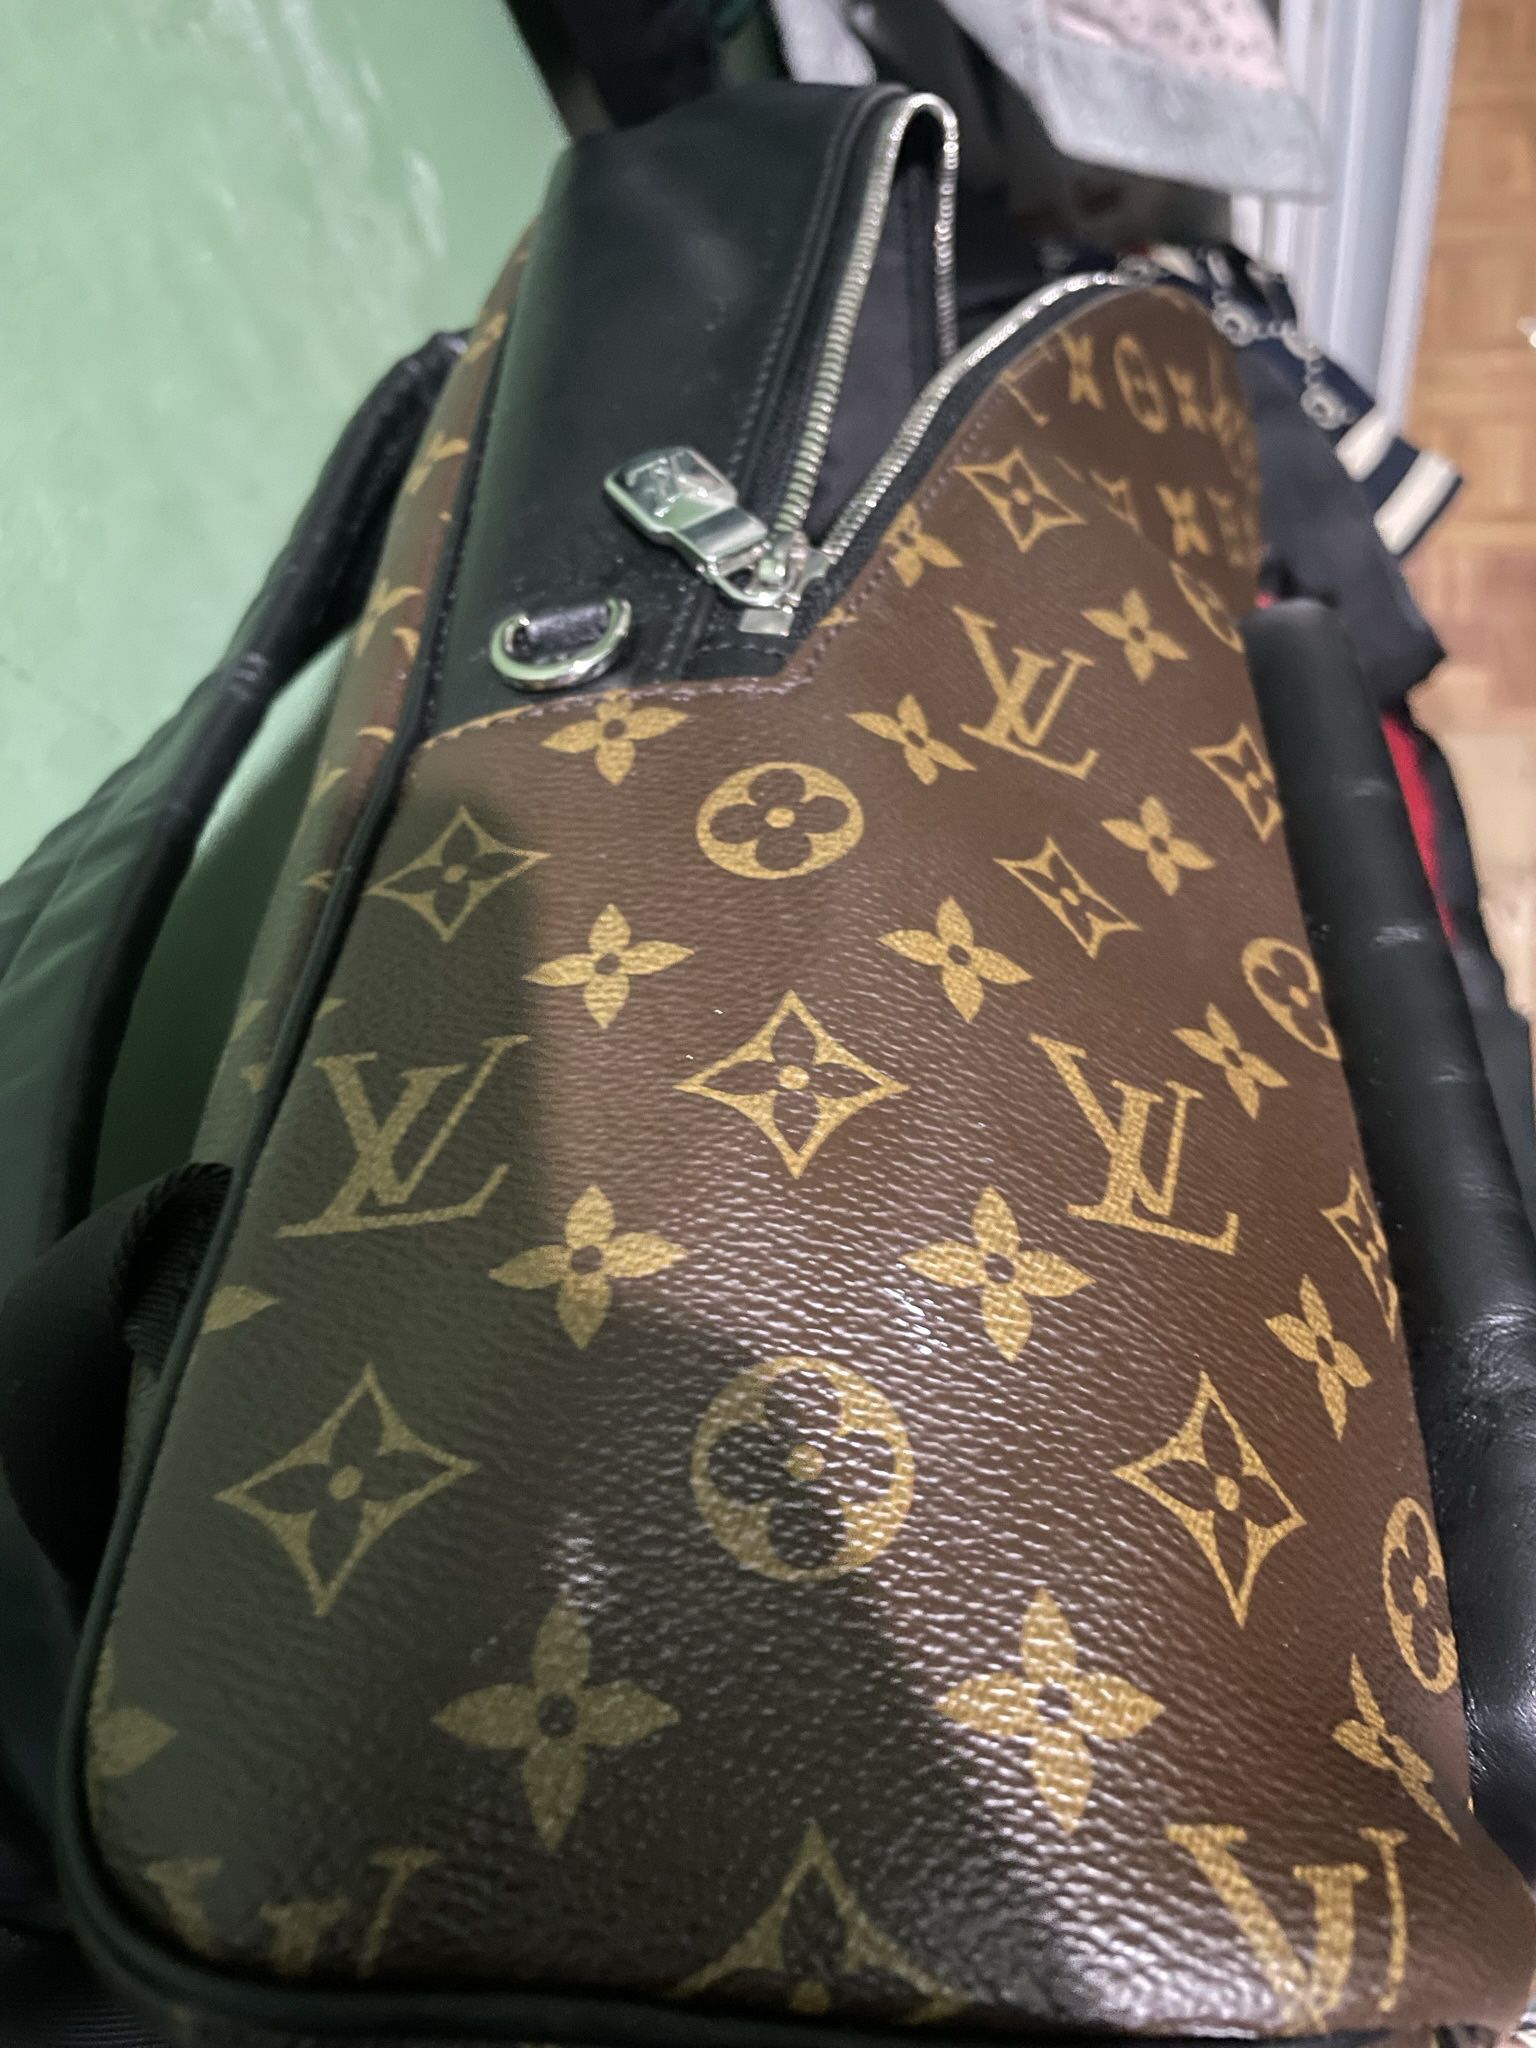 Louis Vuitton Josh Backpack Near Flawless for Sale in Austin, TX - OfferUp